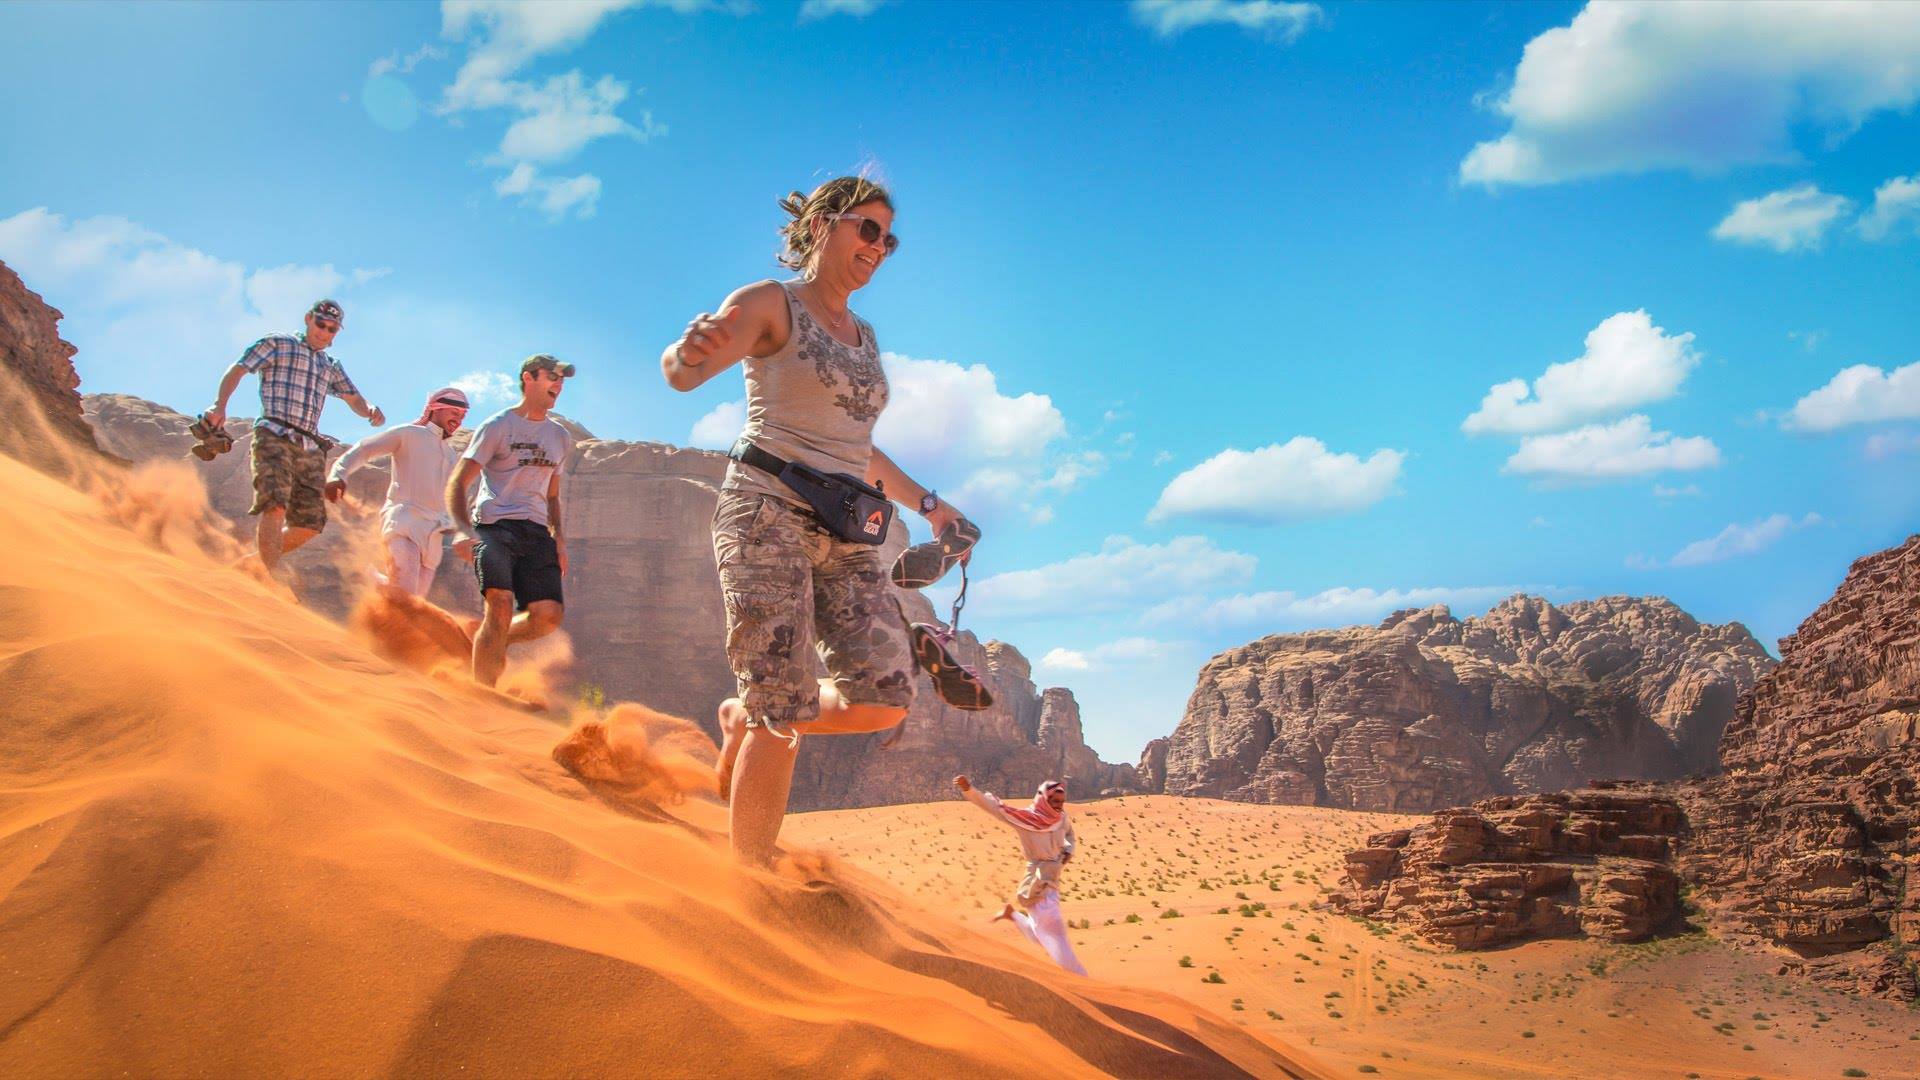 Go Jordan Travel & Tourism Organize Special Jordan Tour Packages 2022 for Avid Traveler’s